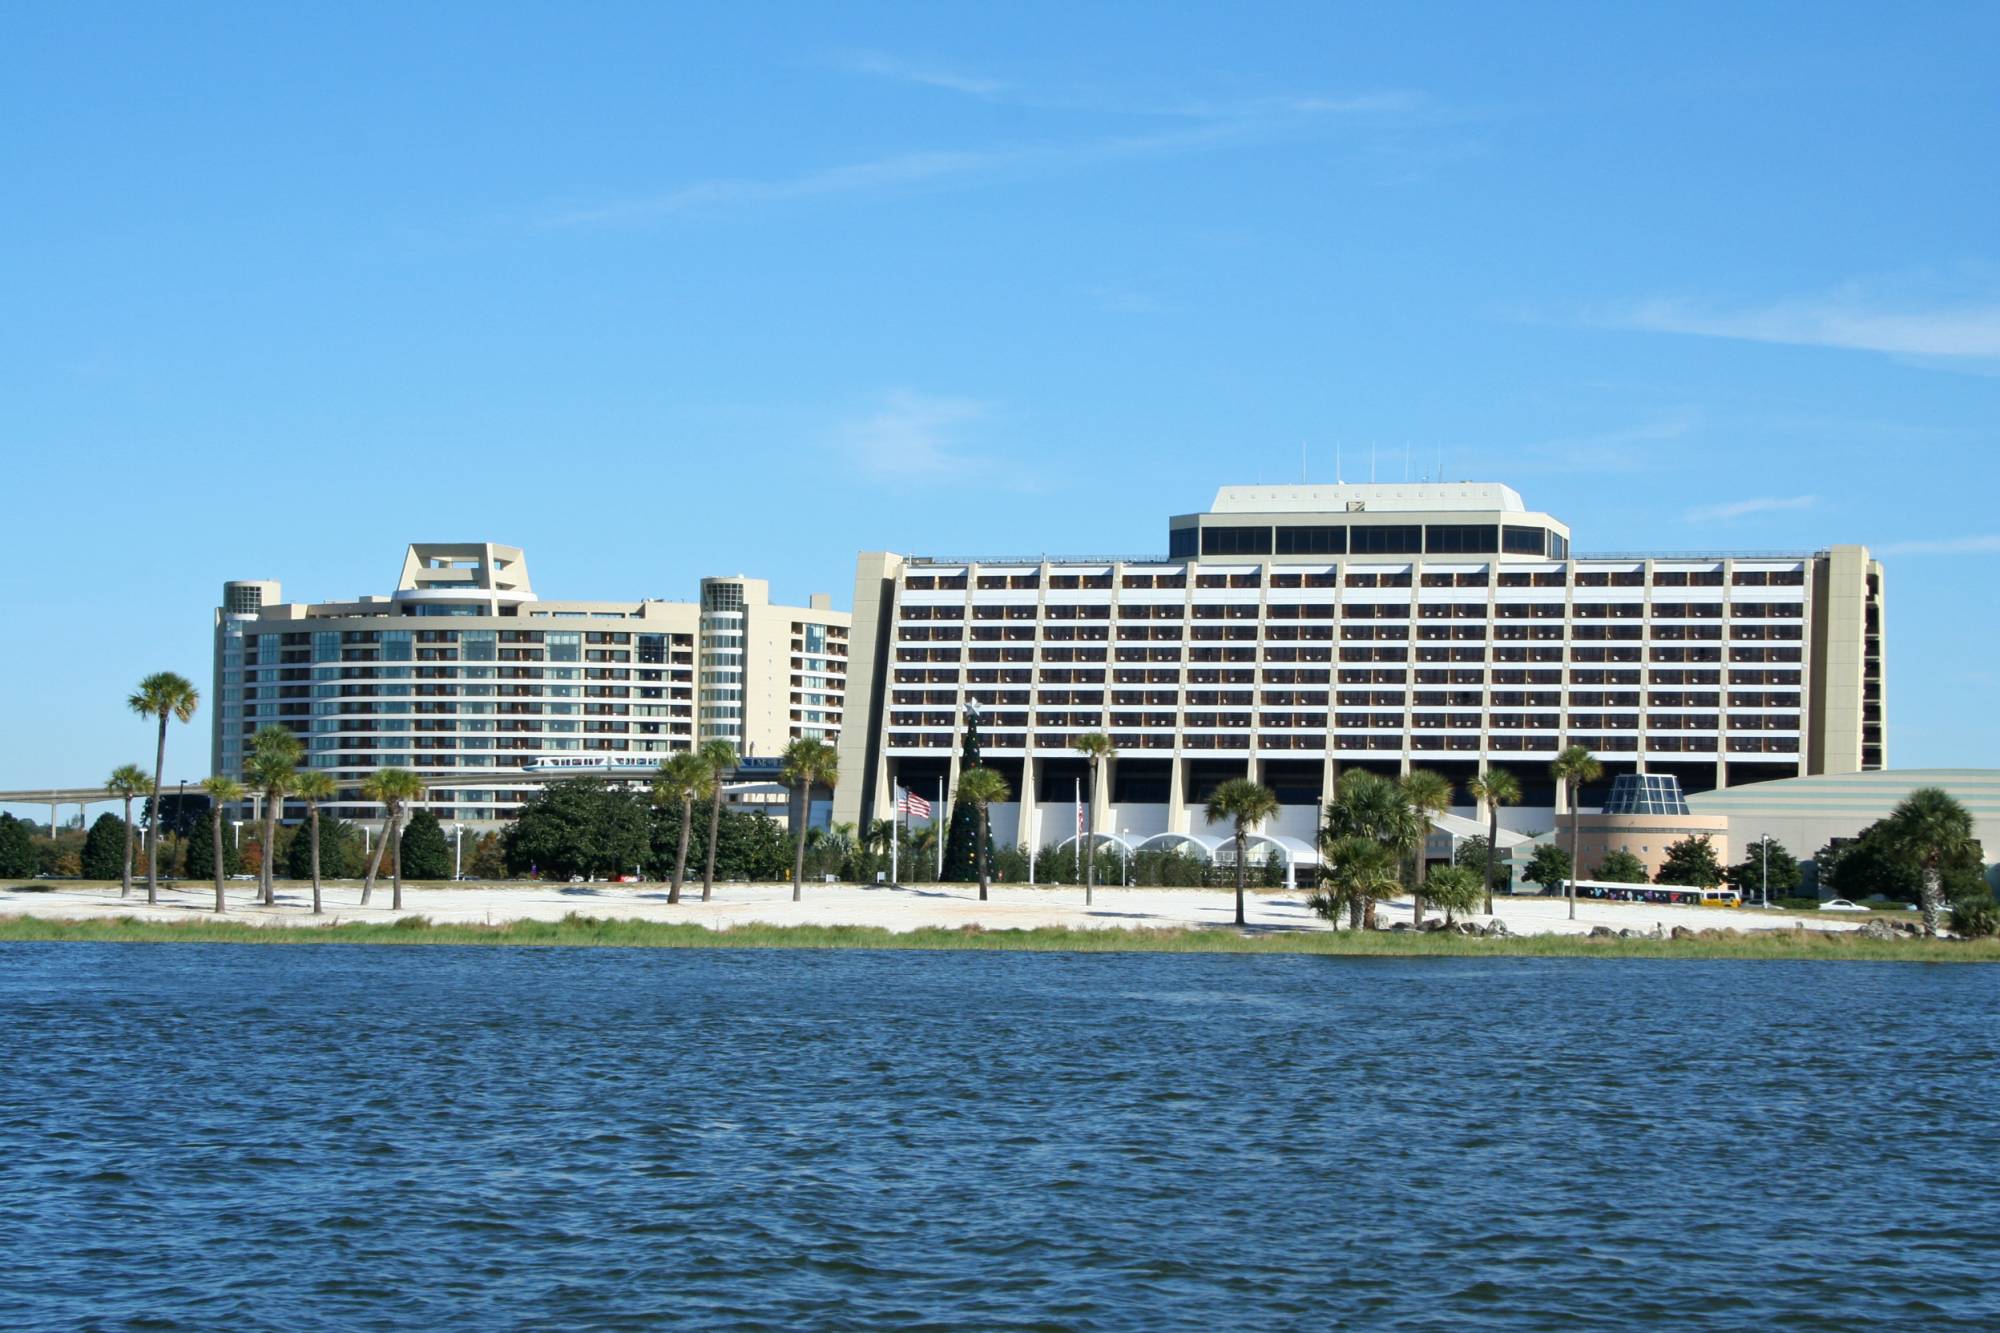 Contemporary Resort and Bay Lake Tower